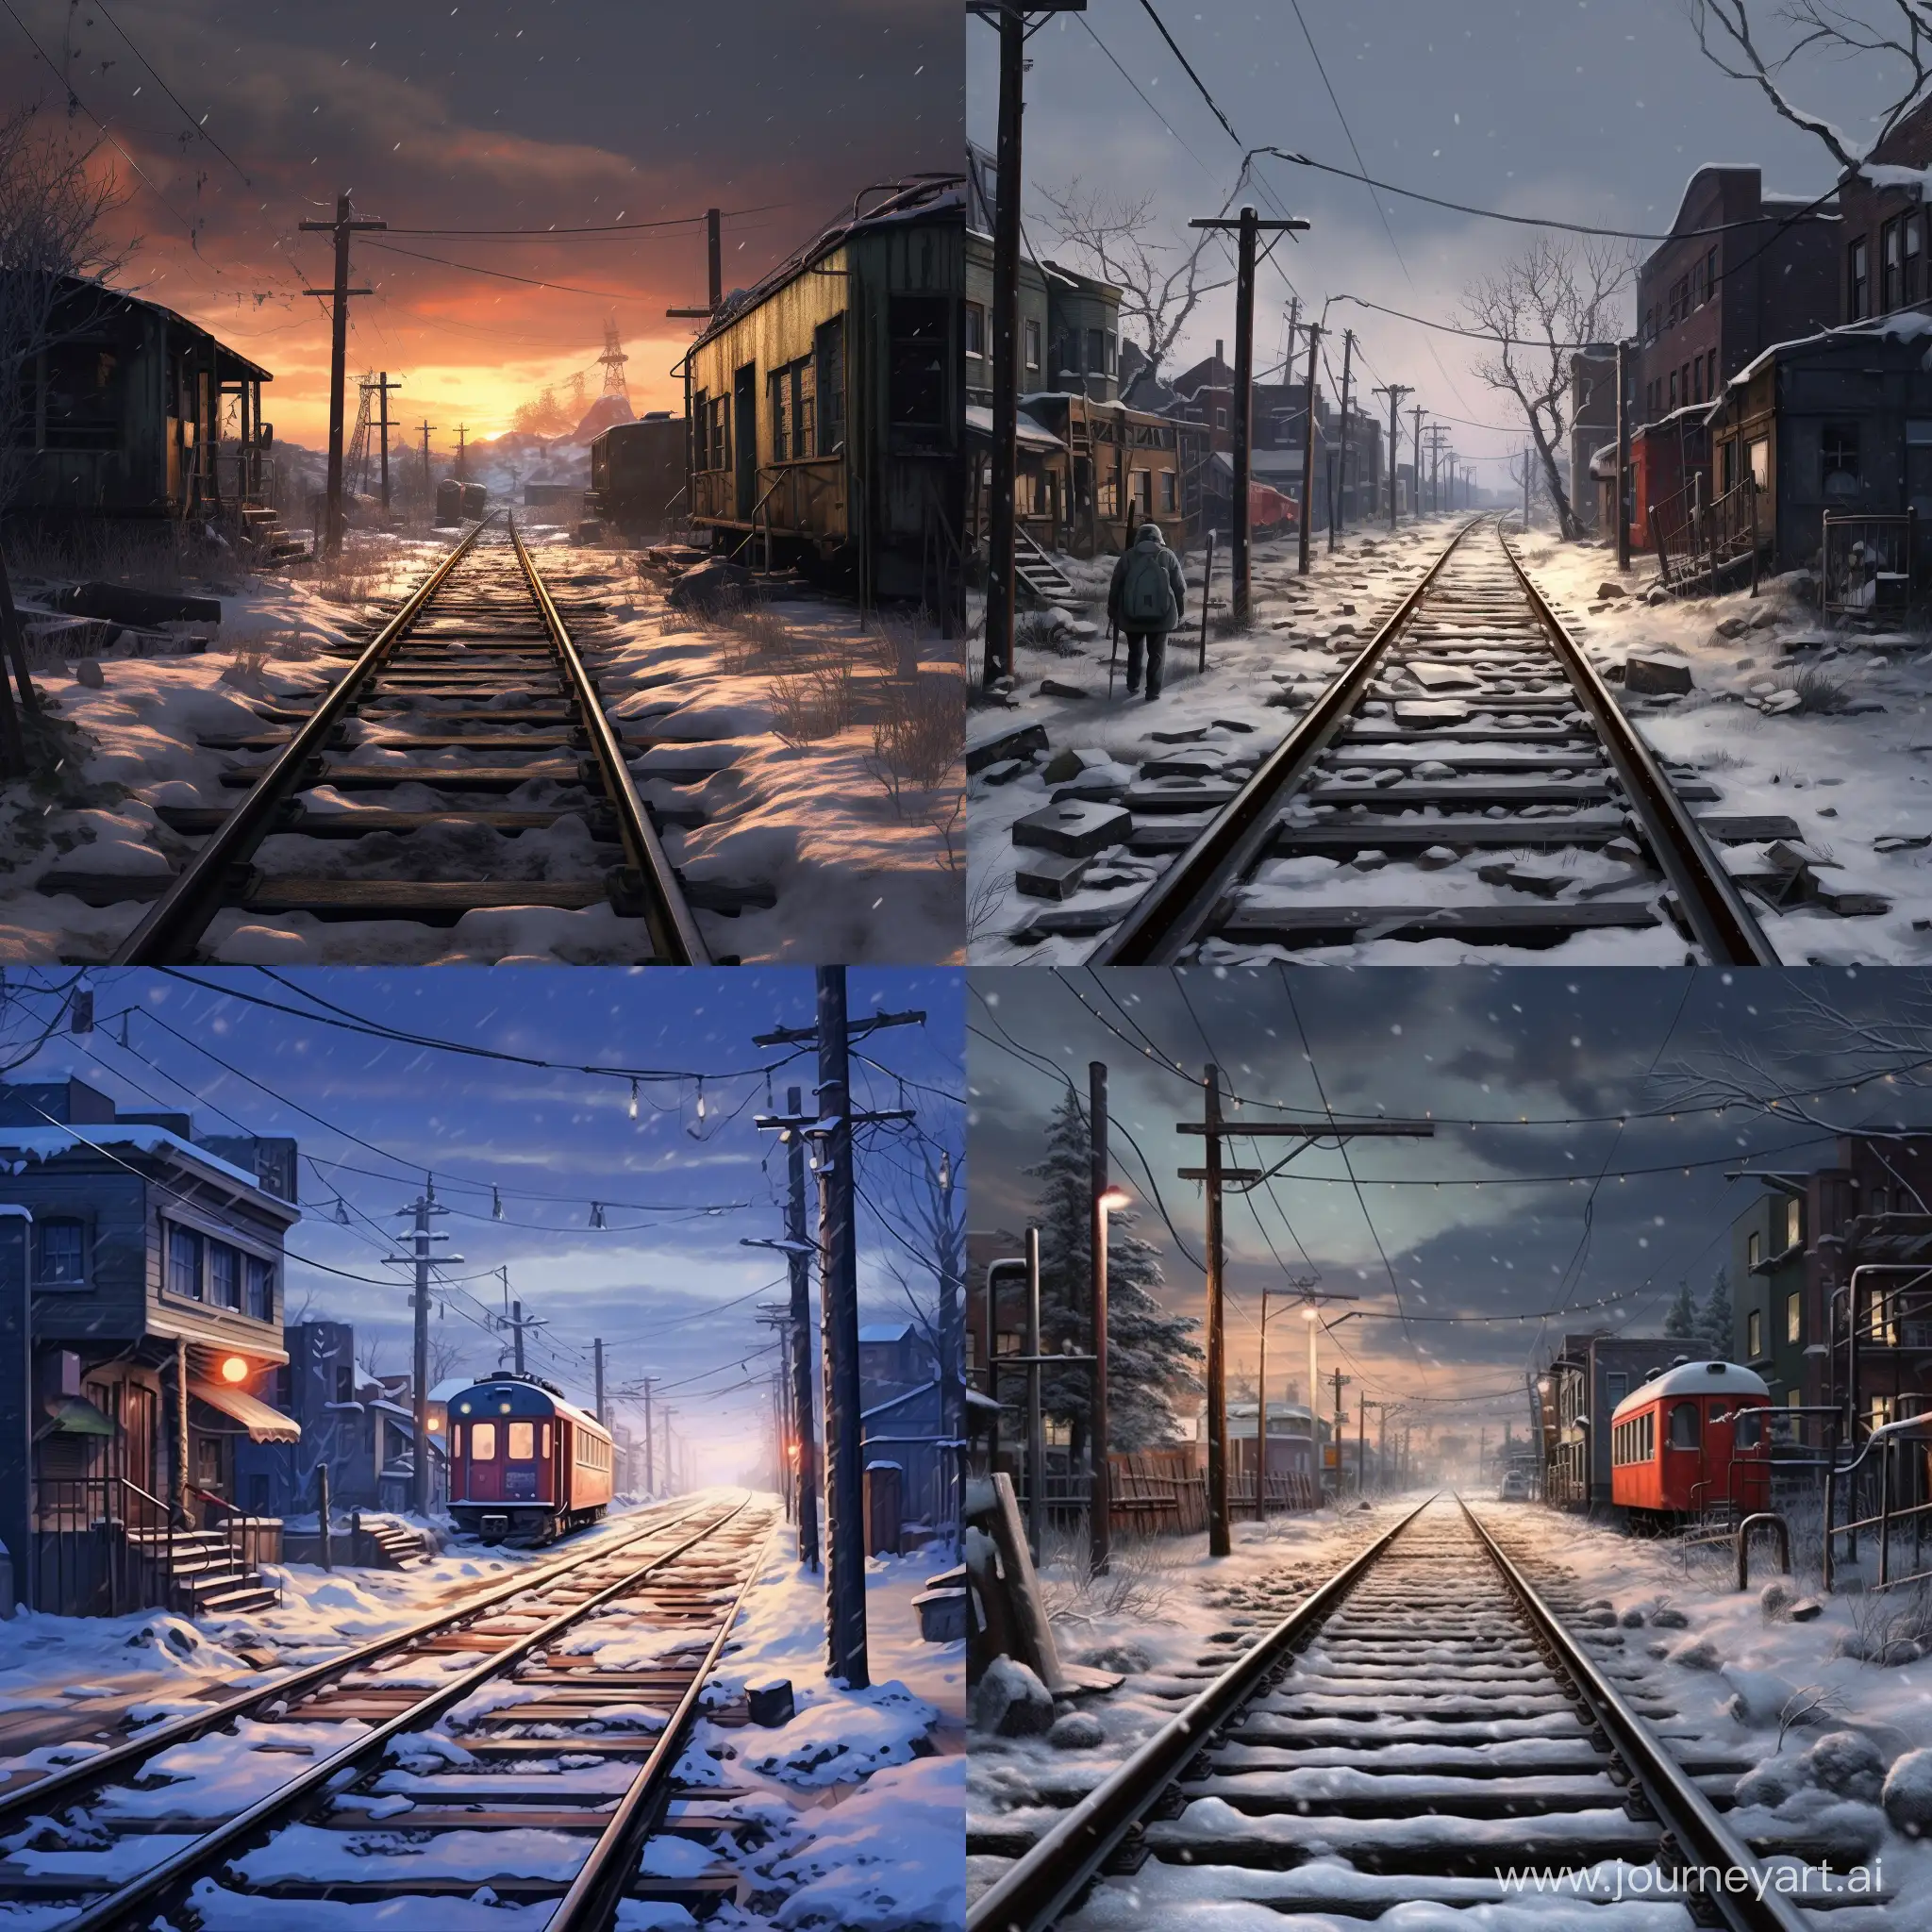 Realistic-Winter-Scene-Snowstorm-Covered-Tracks